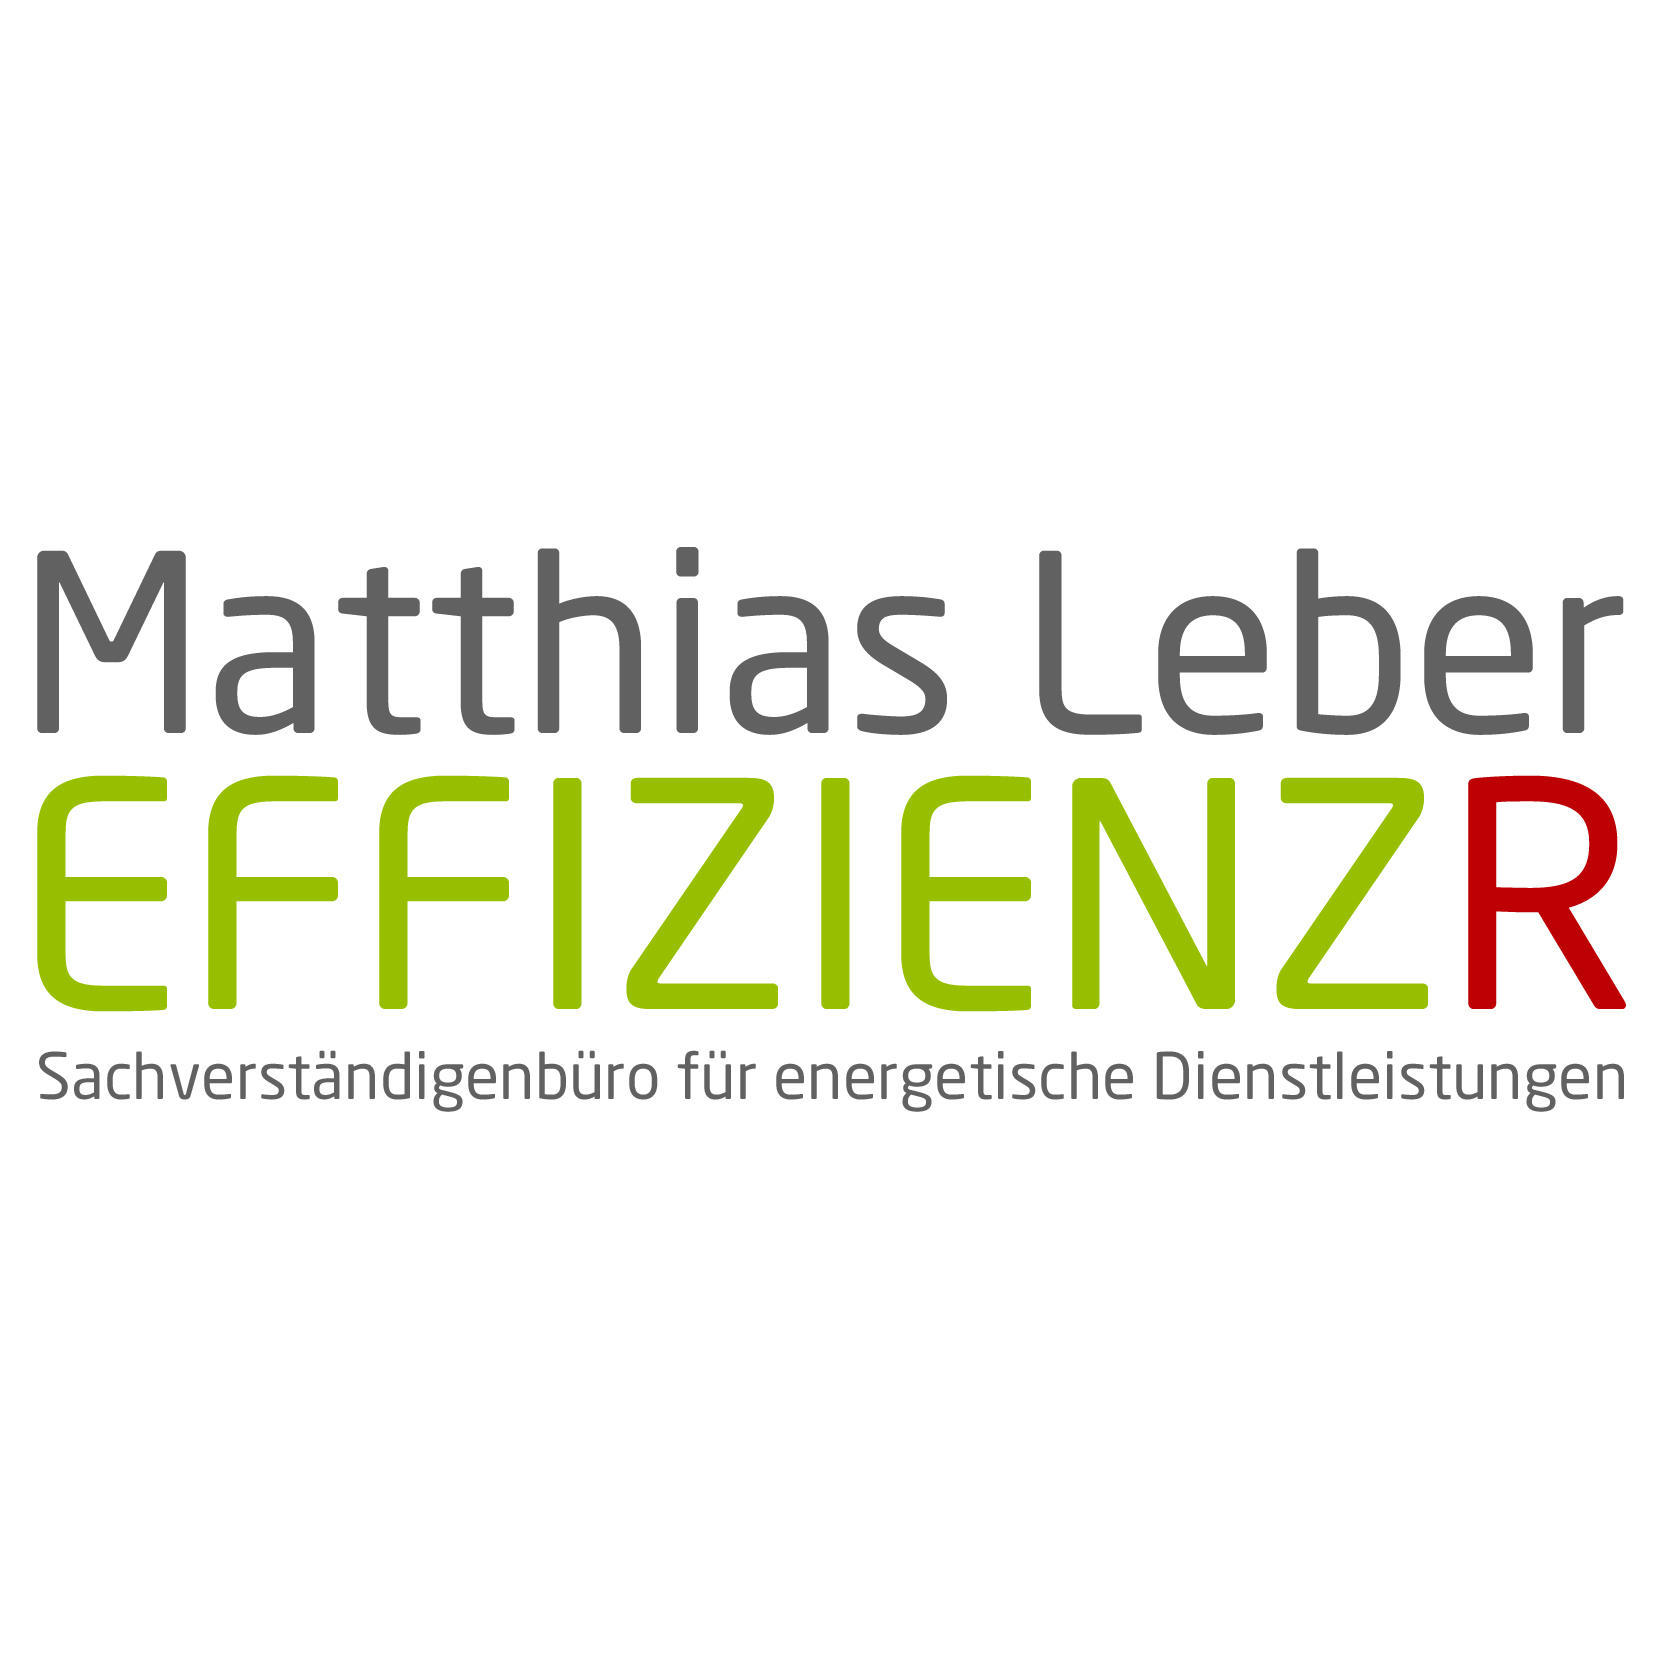 Matthias Leber - EFFIZIENZR  